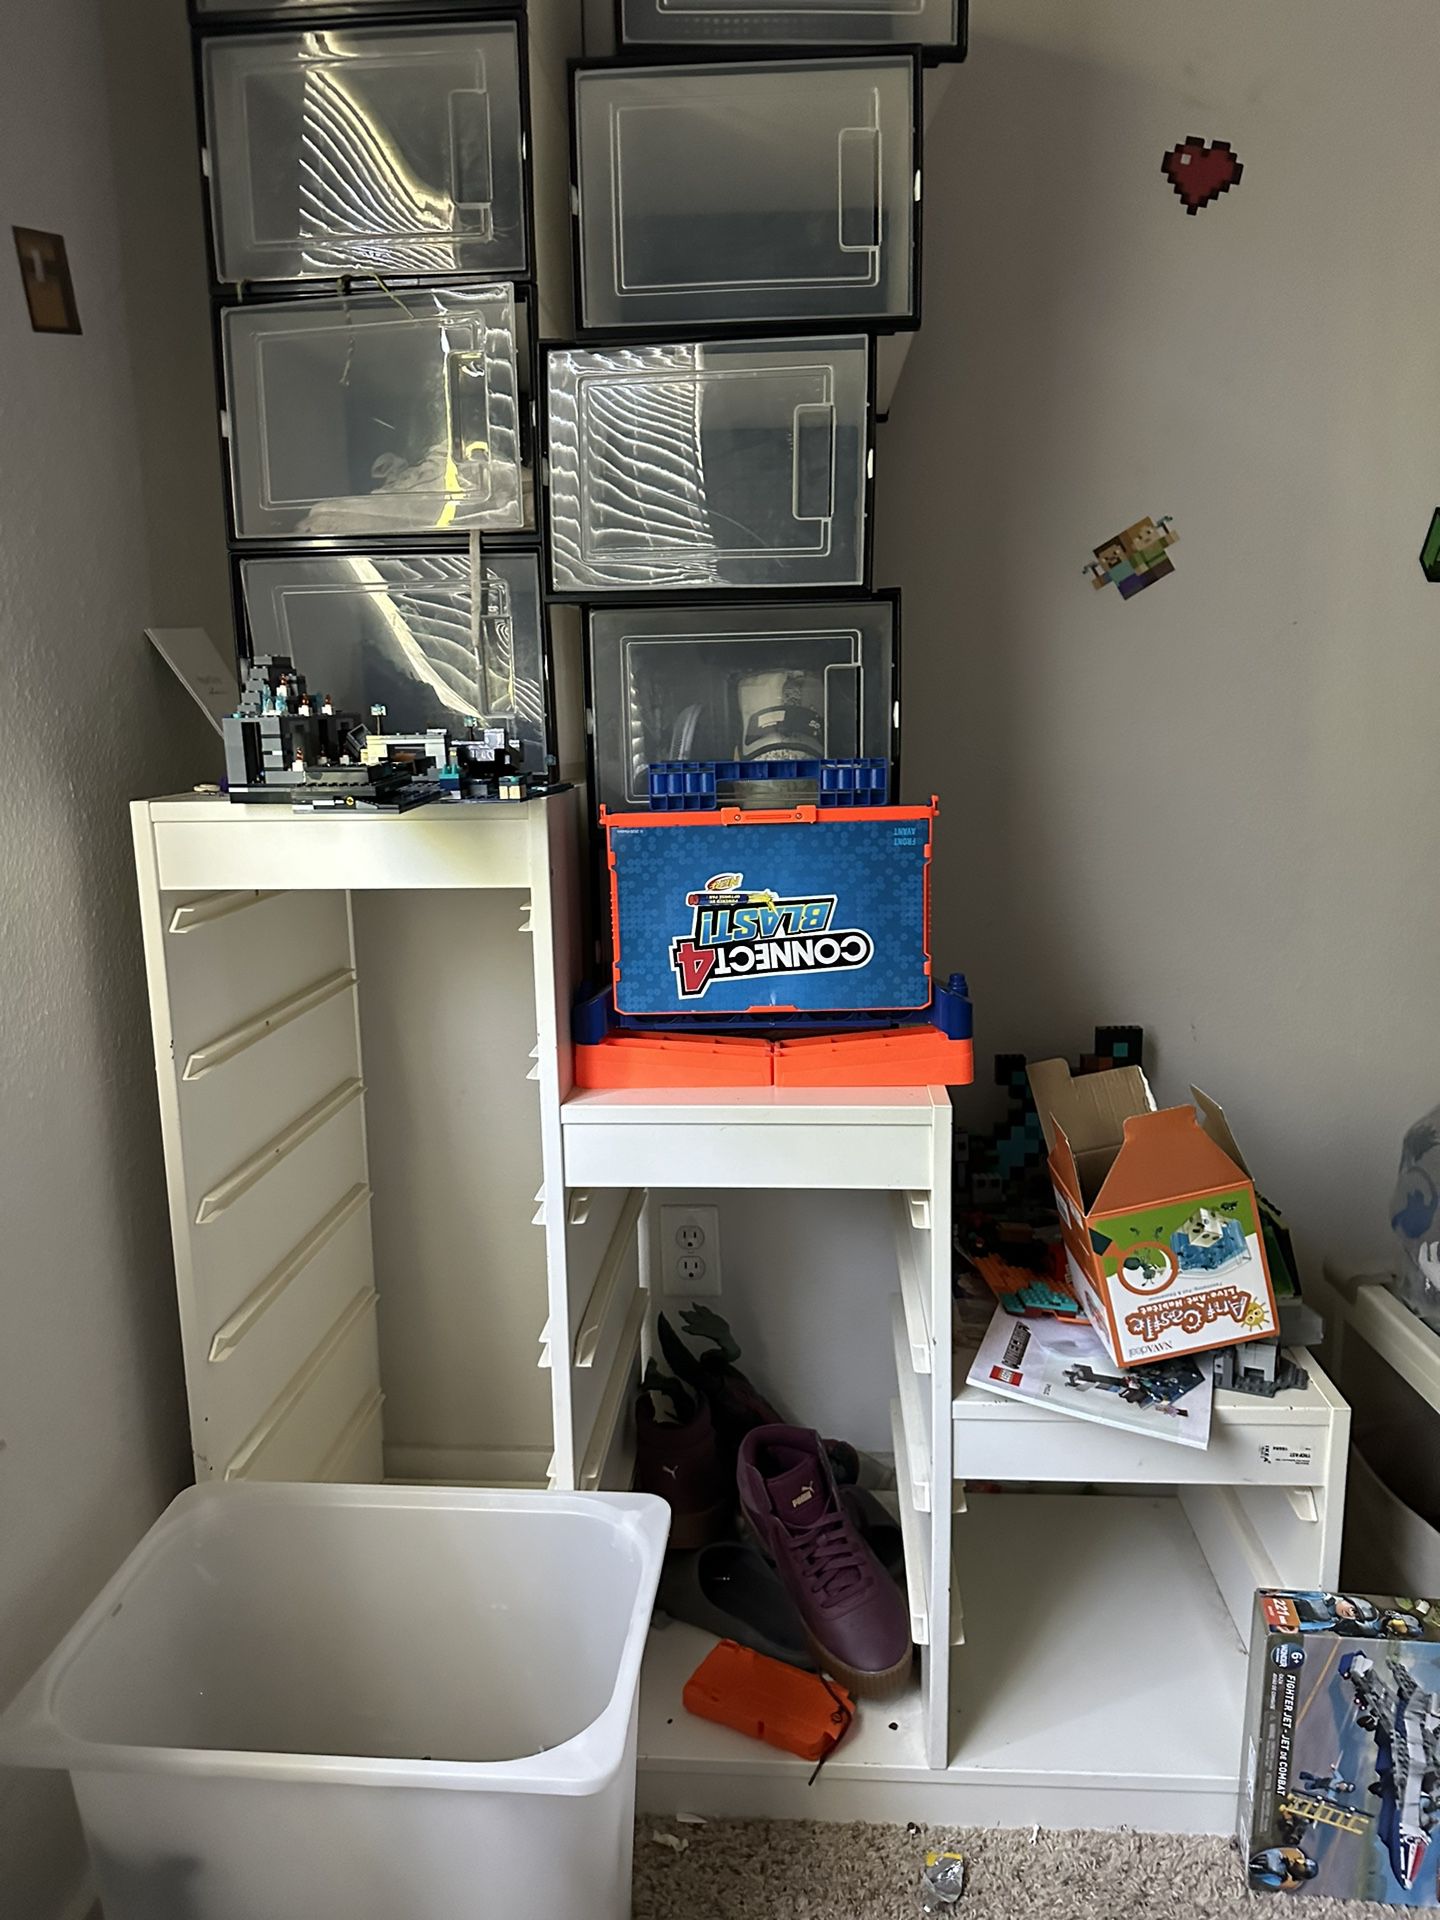 Toy Storage